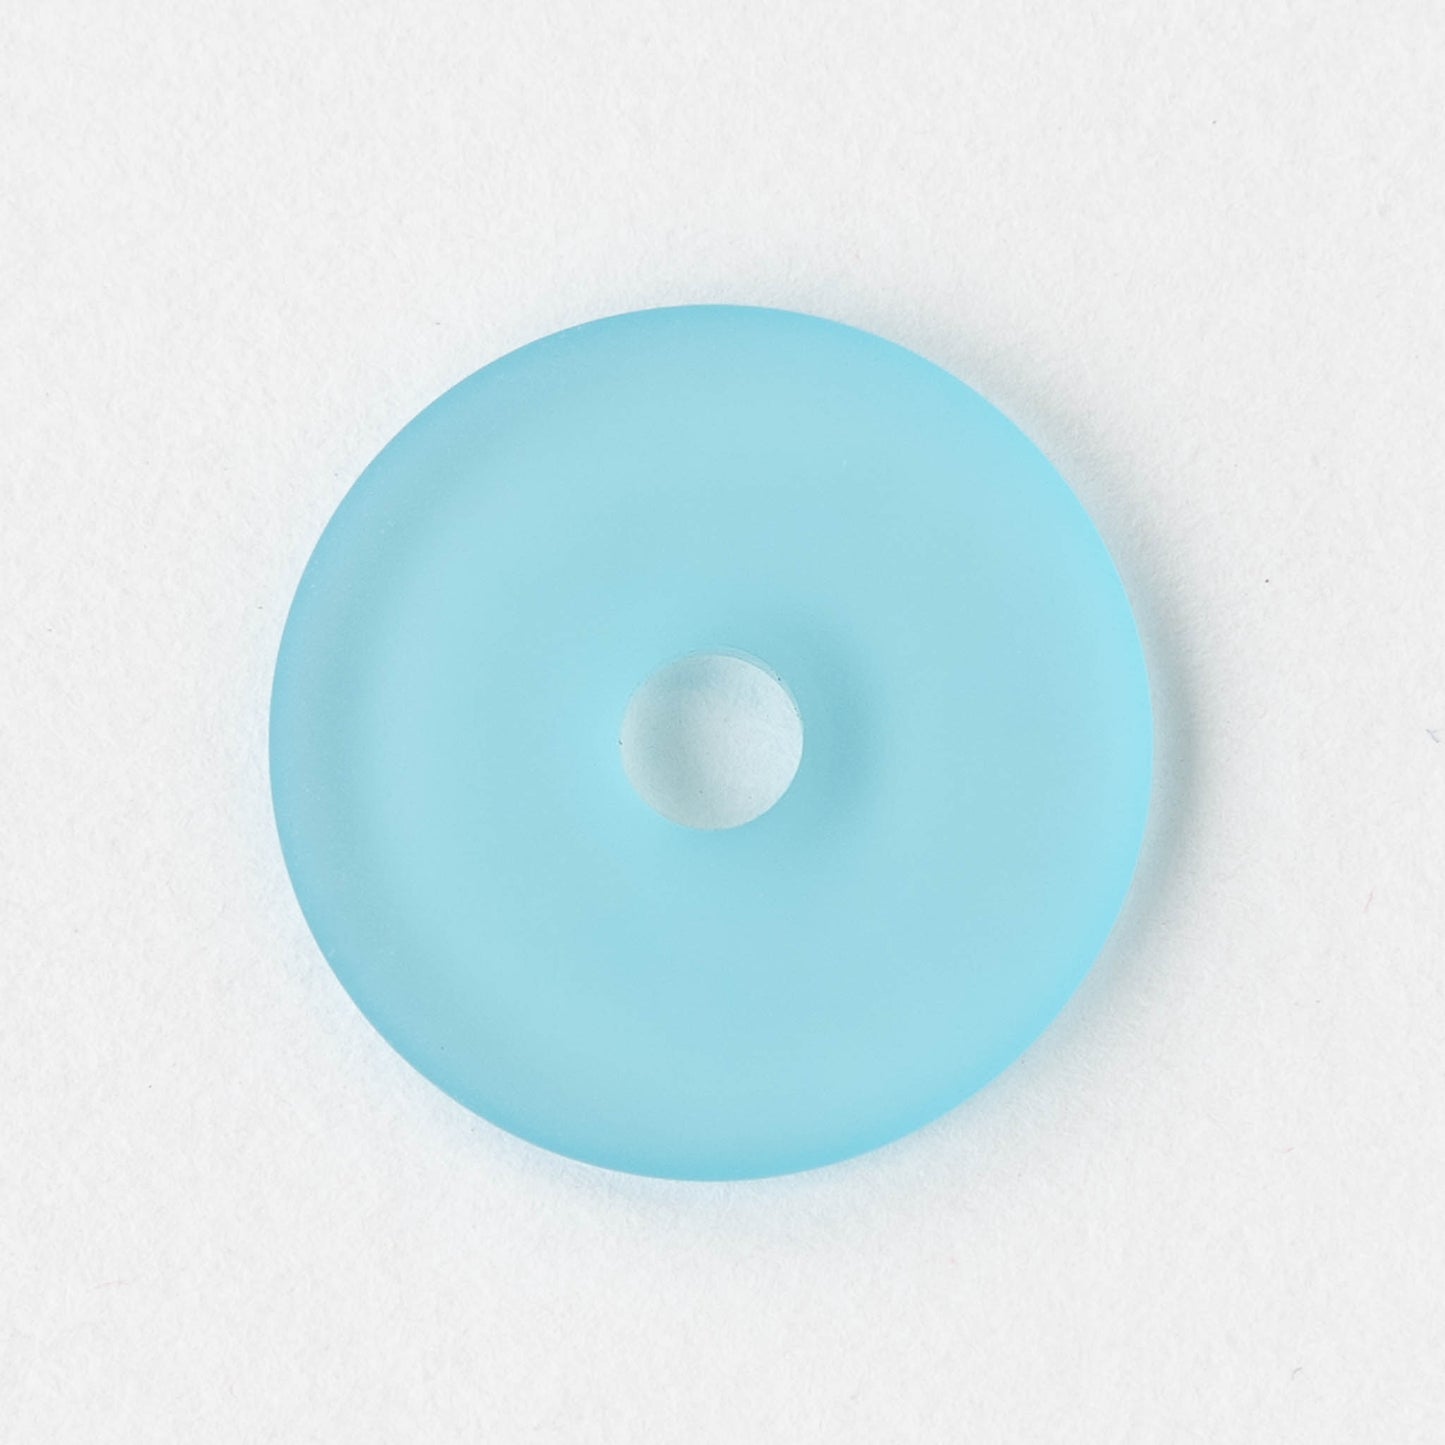 25mm Frosted Glass Donut - Light Aqua Blue - 4 Beads